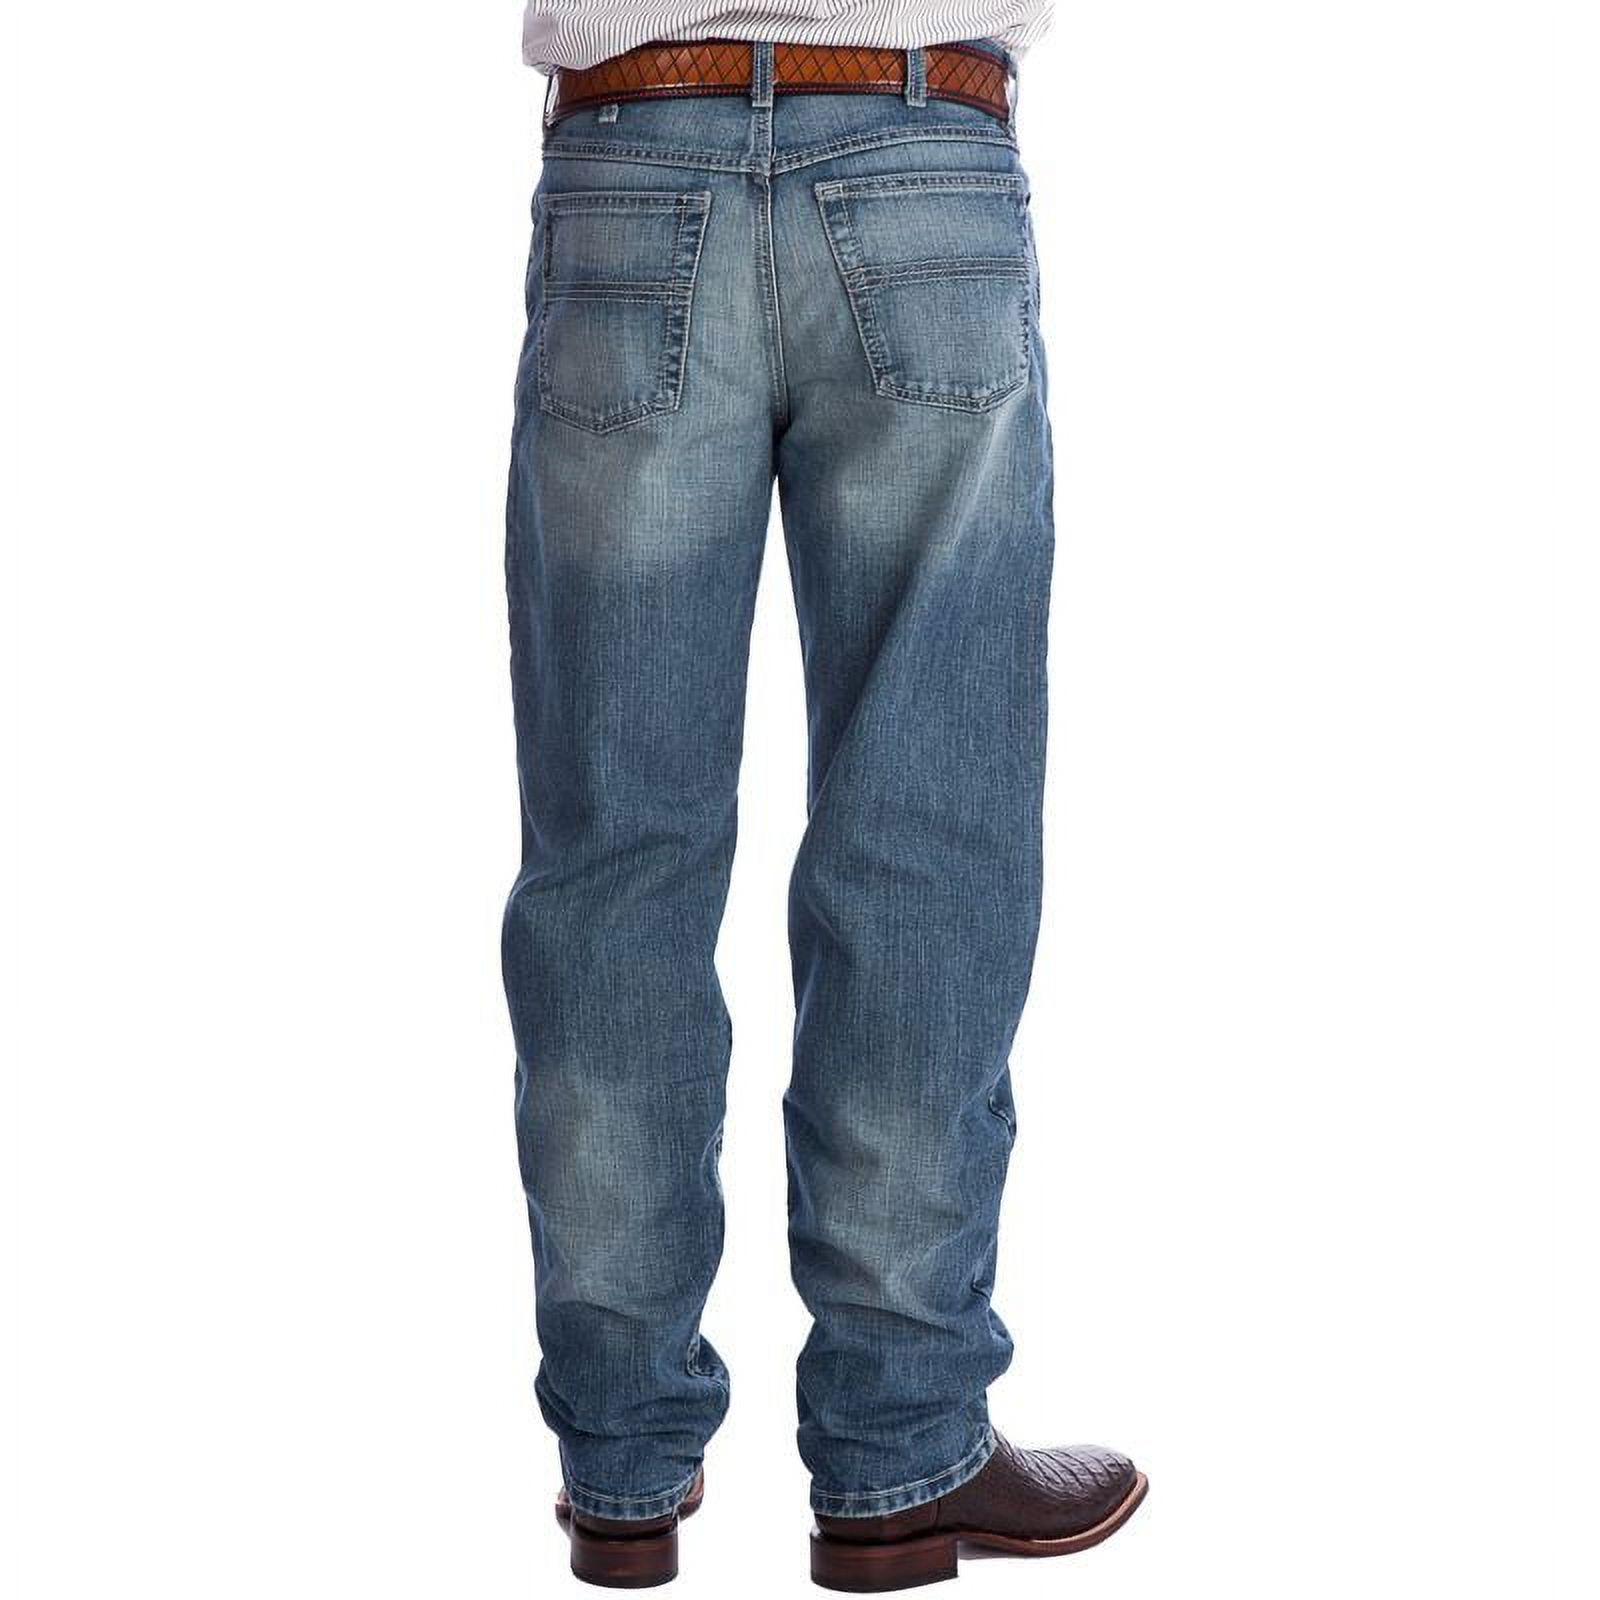 Cinch Men's Label 2.0 Medium Wash Jeans Med Stone 36W x 32L  US - image 1 of 3